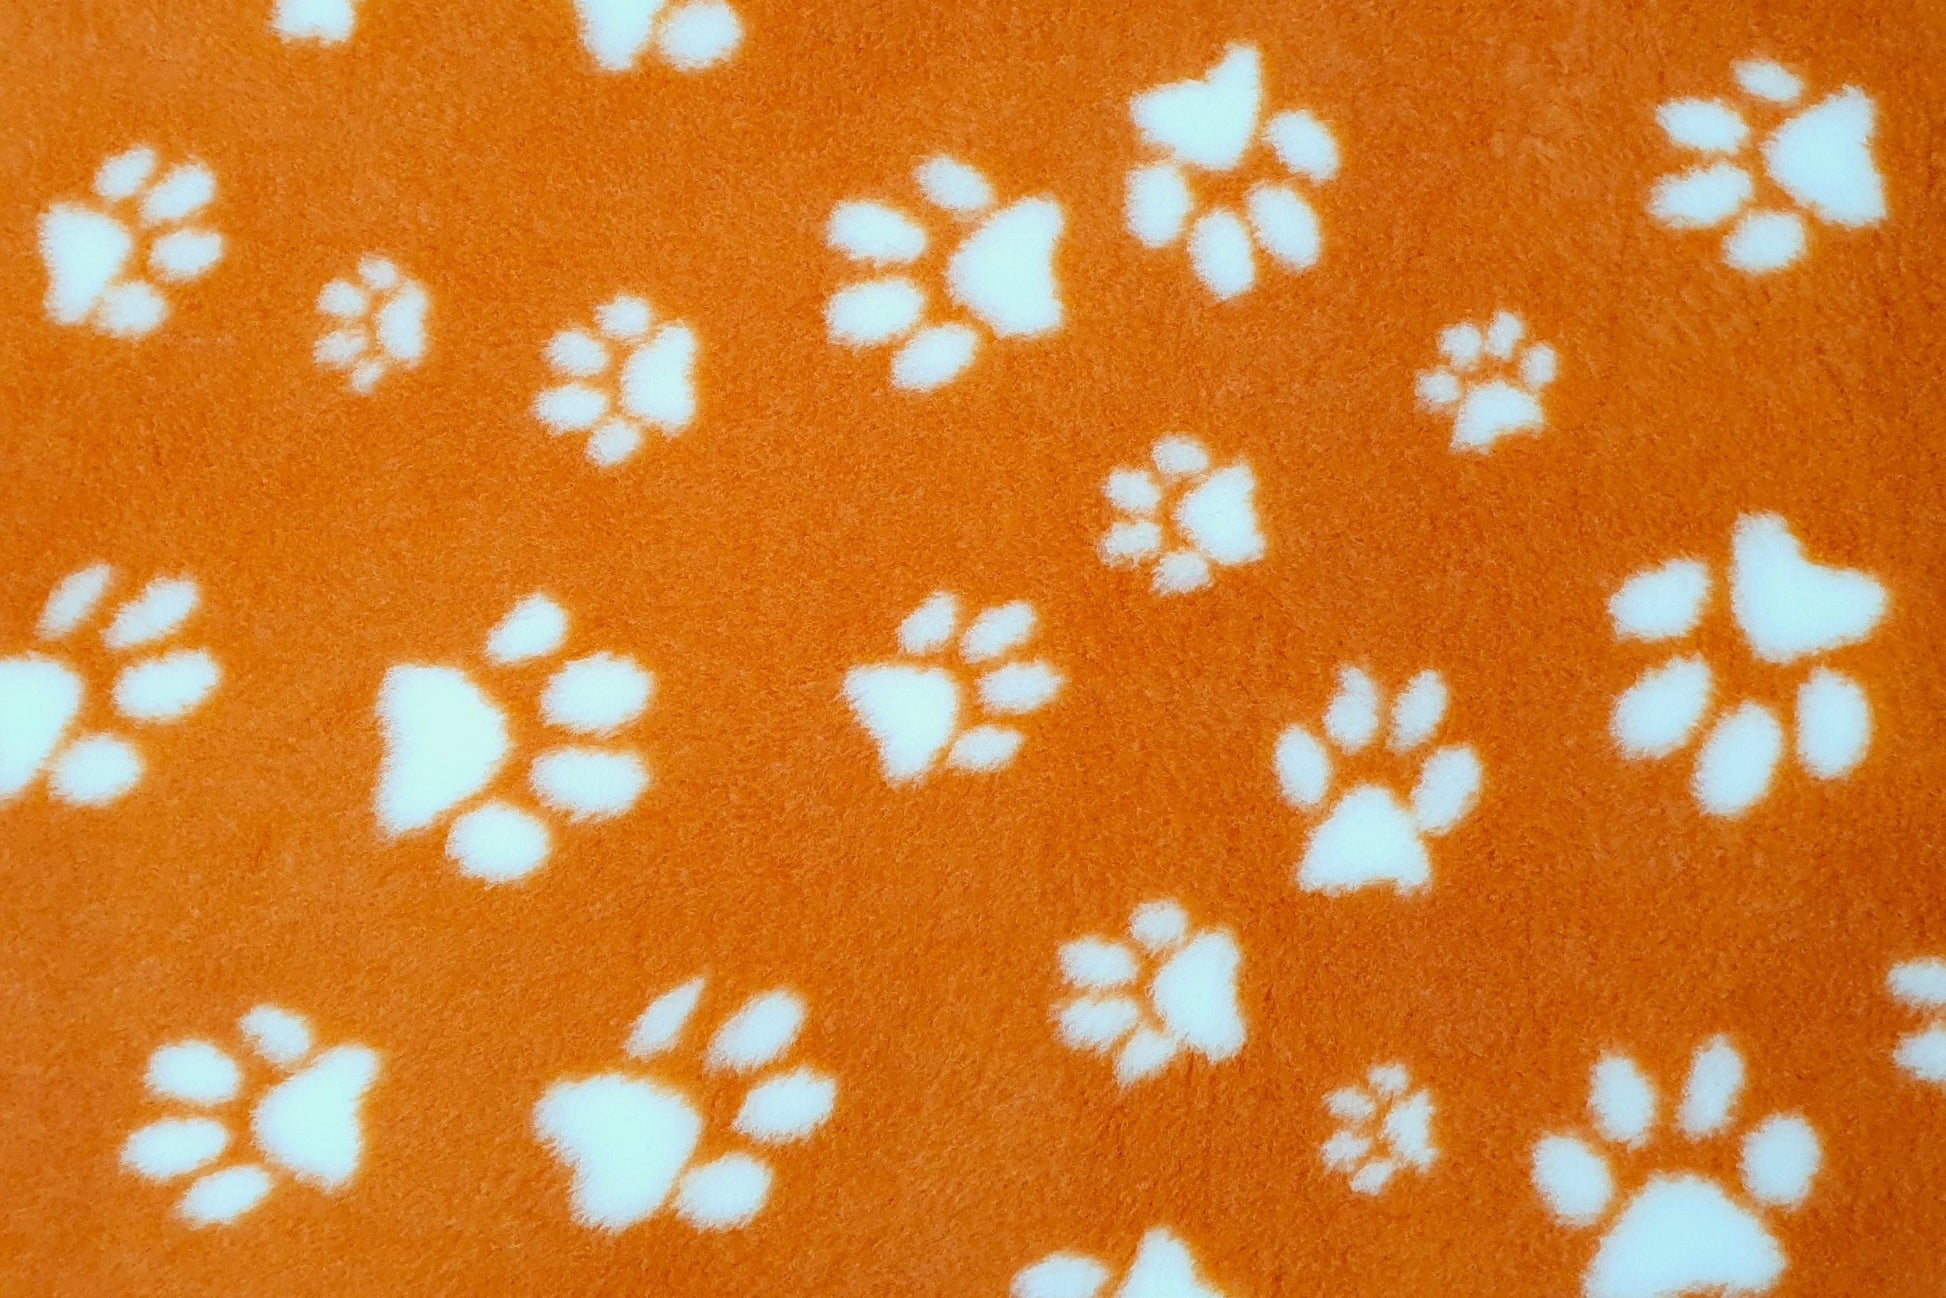 No Backing - Vet Bed - Orange with White Designer Paws